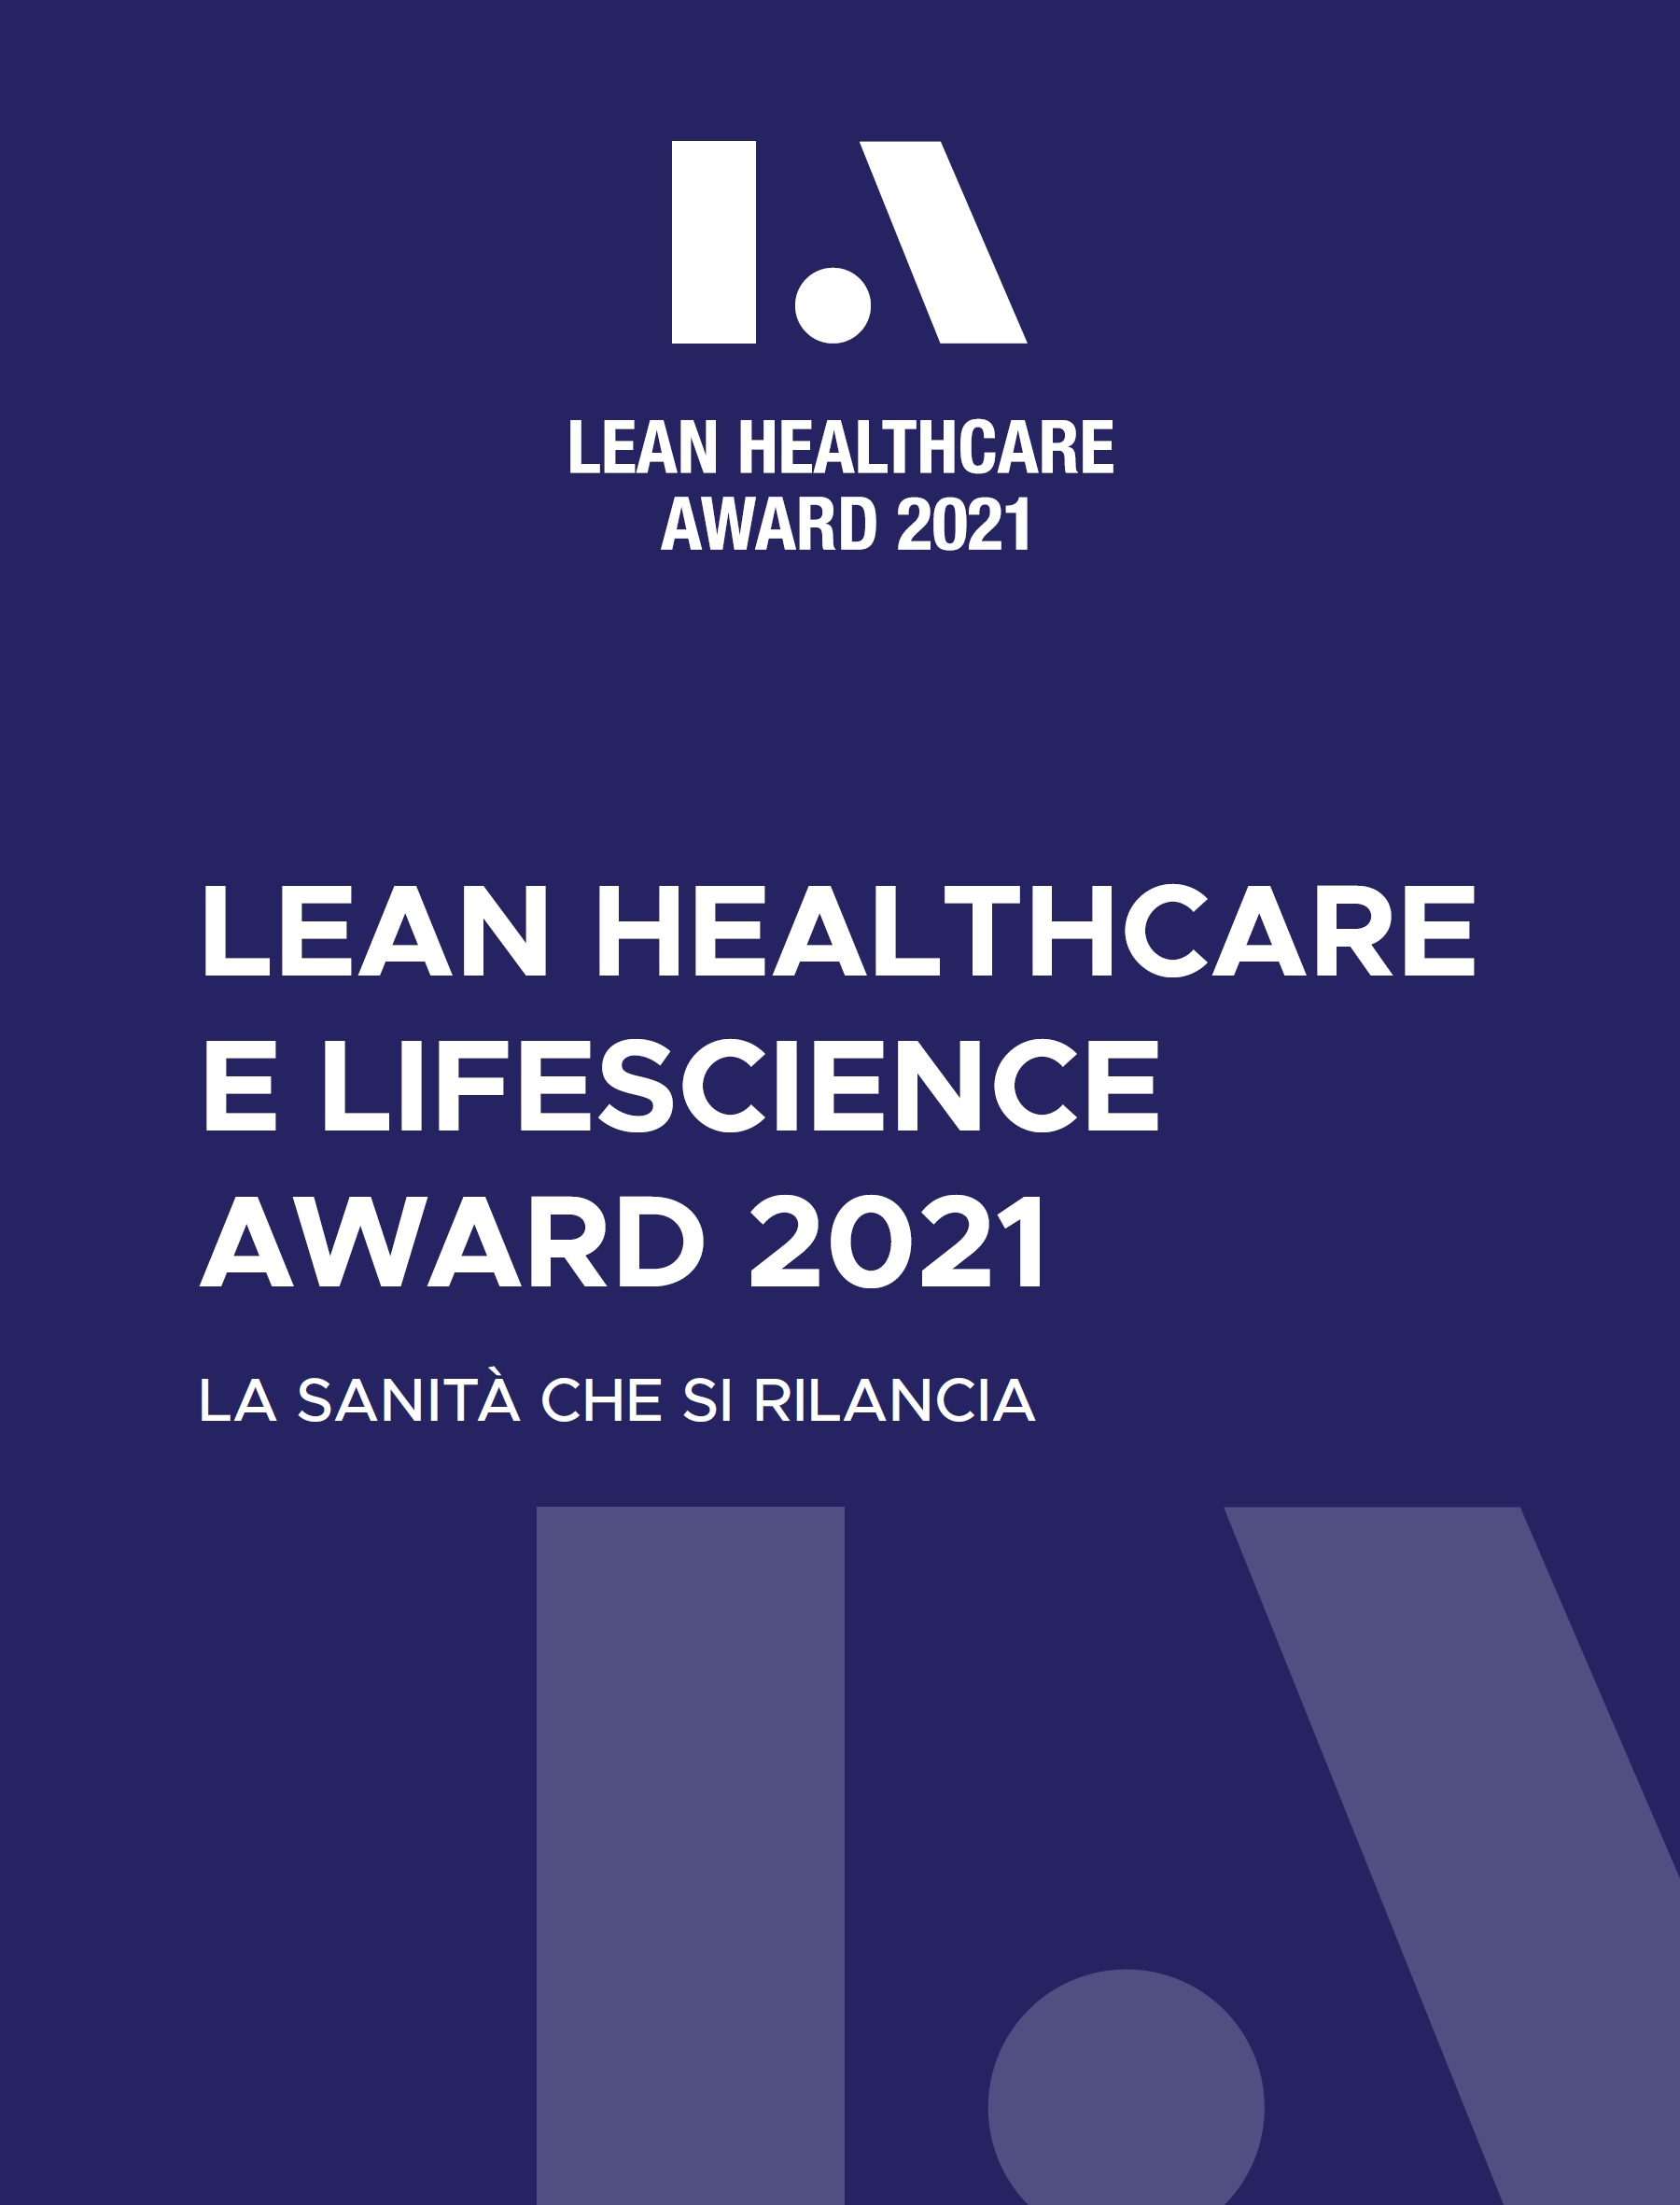 Lean Healthcare e Lifescience Award 2021